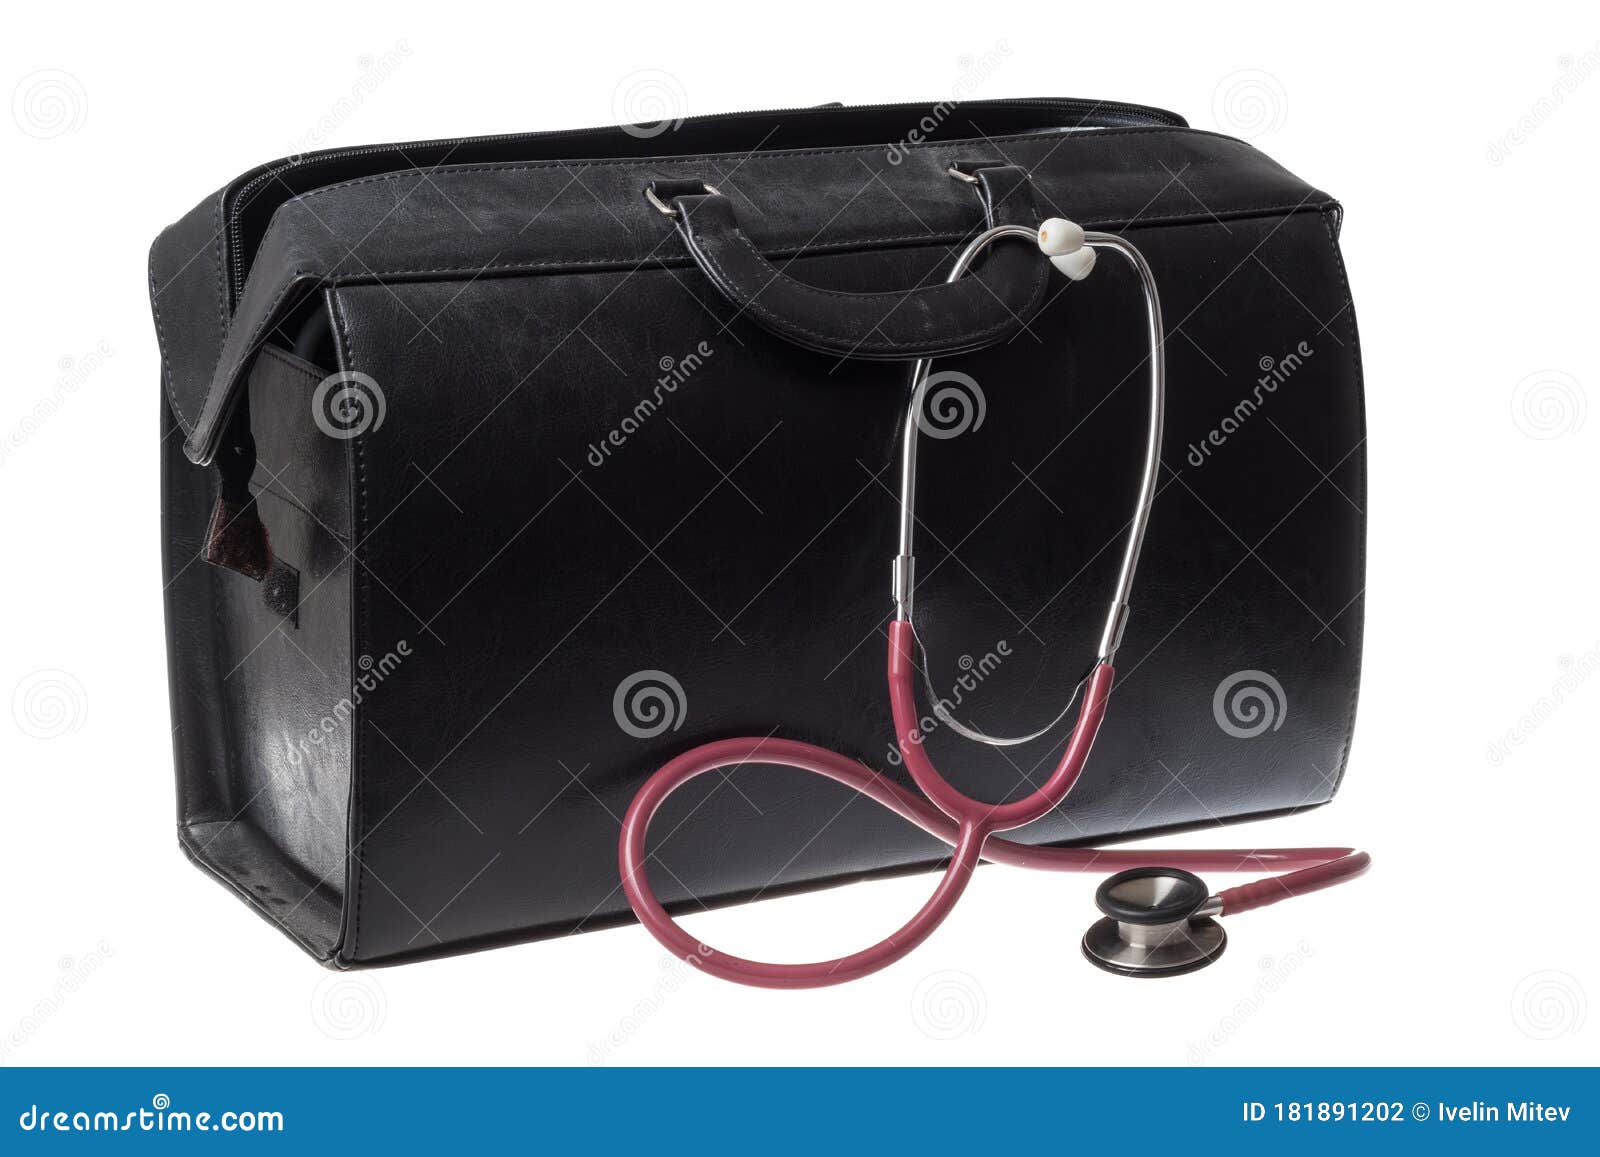 Doctor Bag - Bags